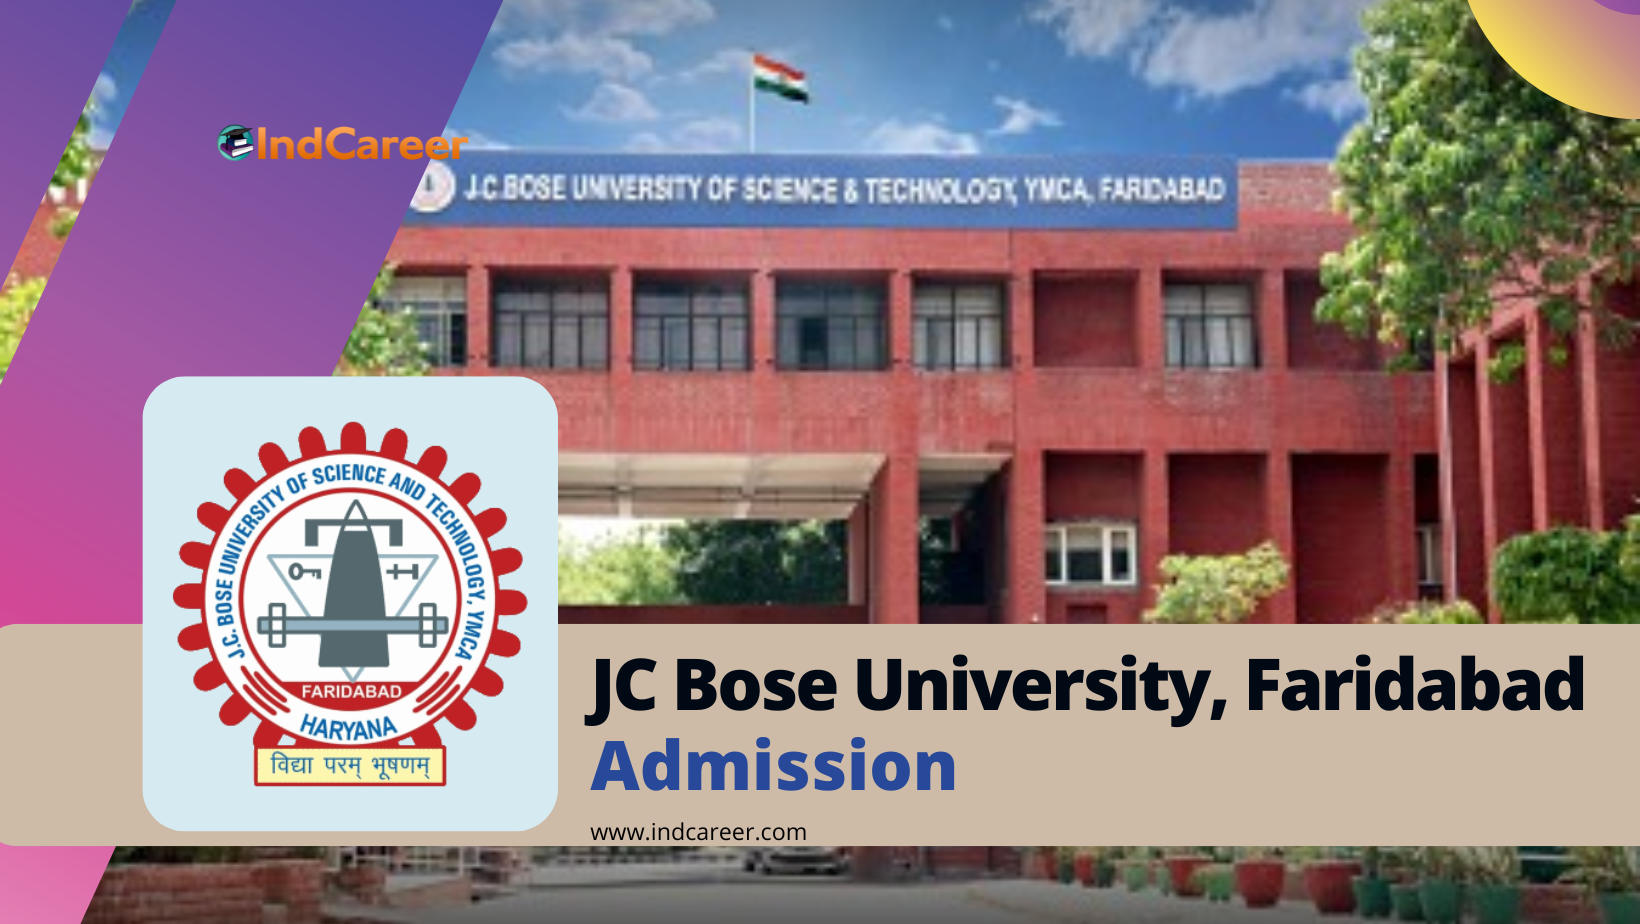 J.C Bose University of Science & Technology Admission